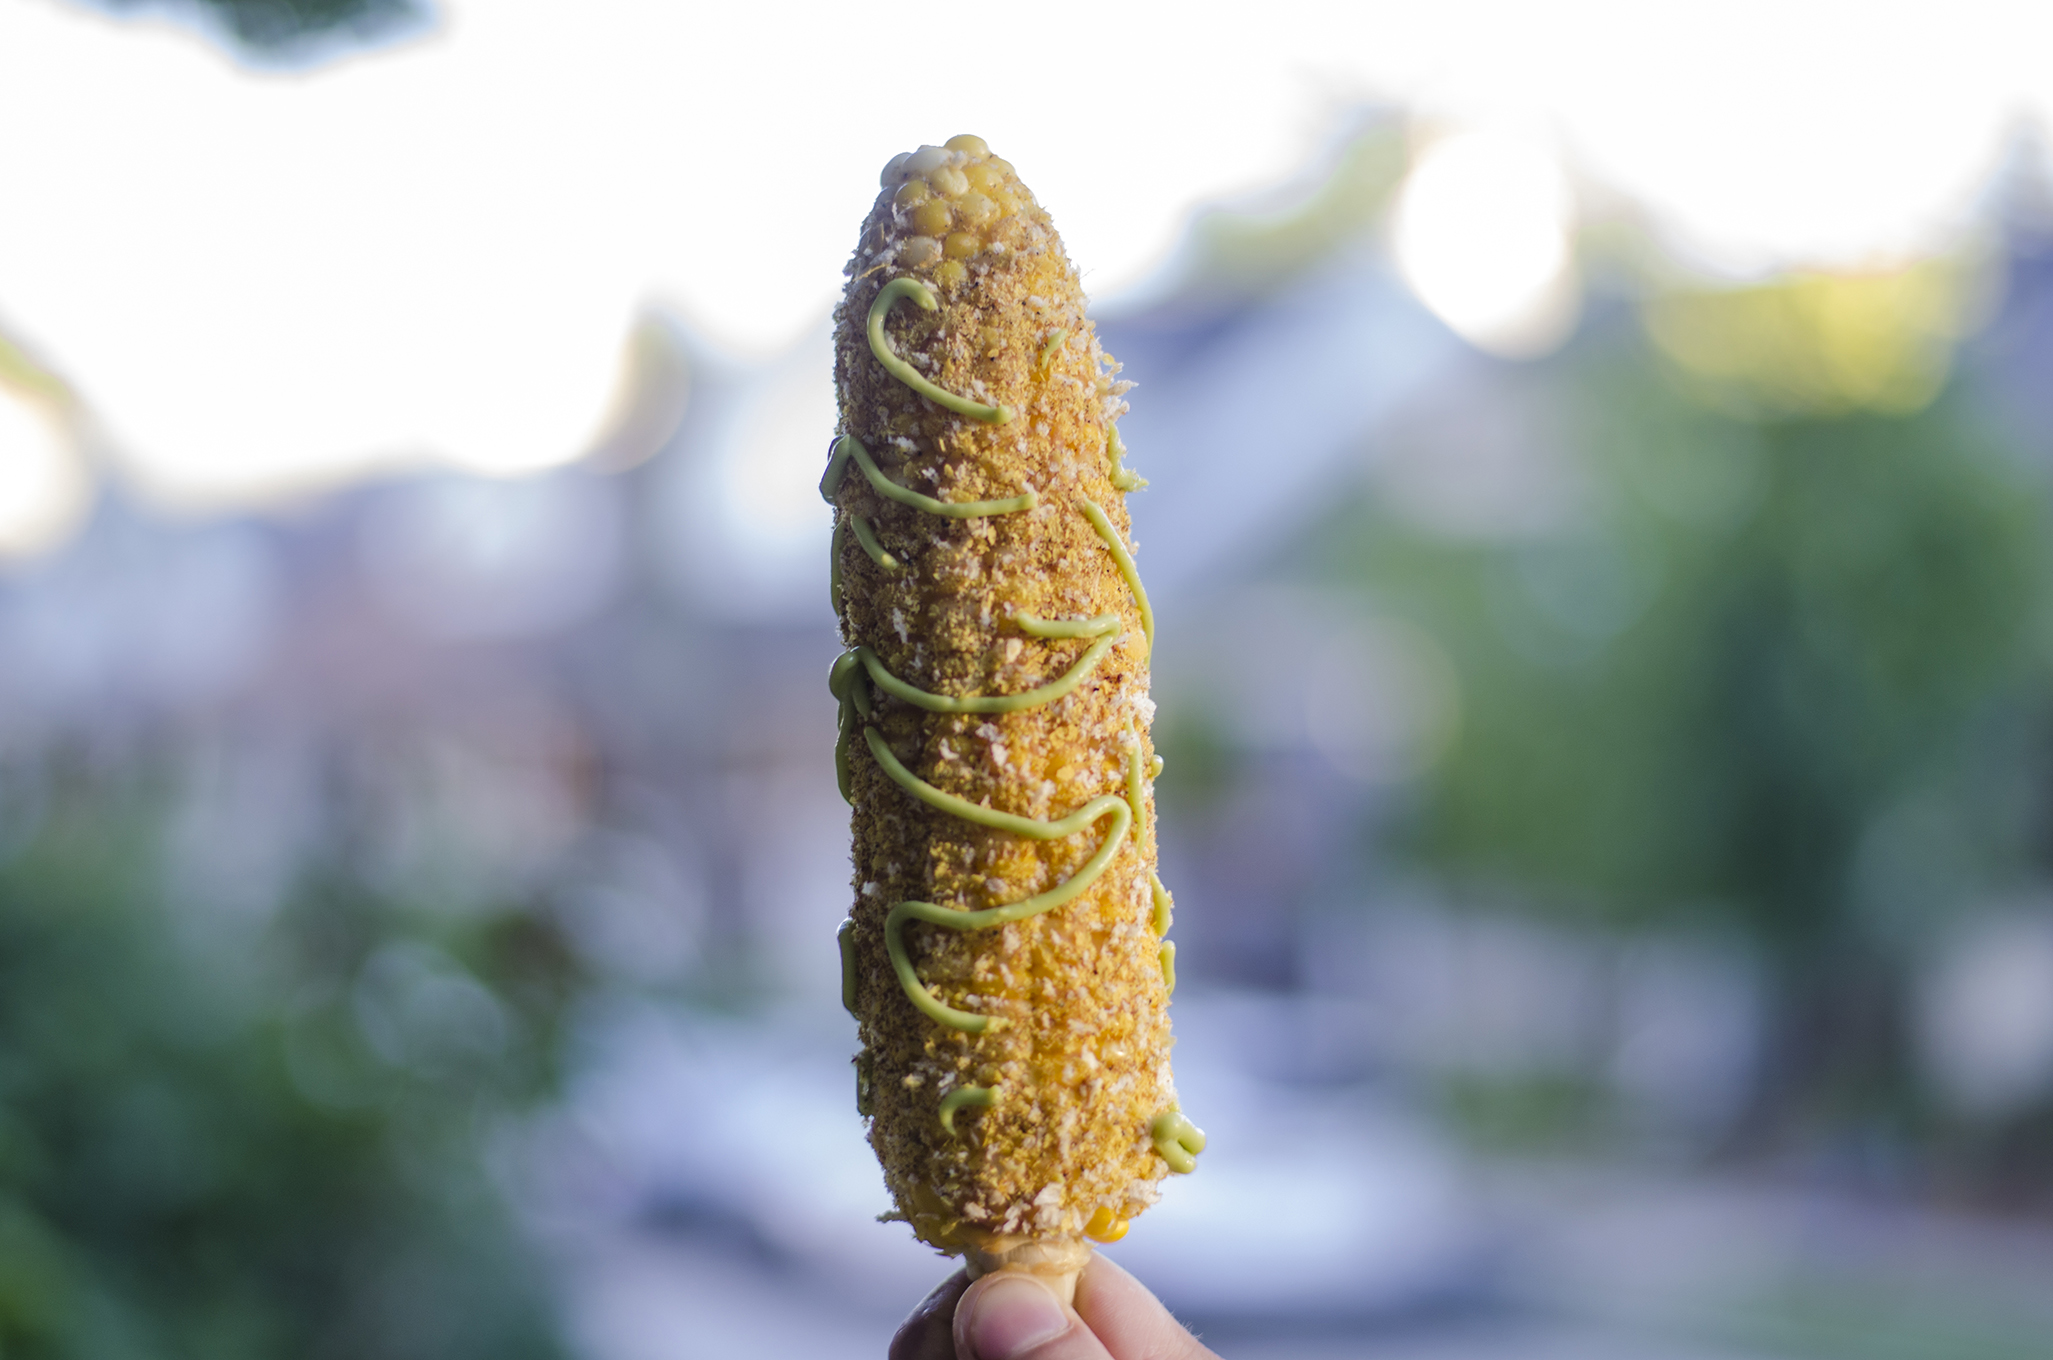 A vegan treat of street corn by WindsorEats.